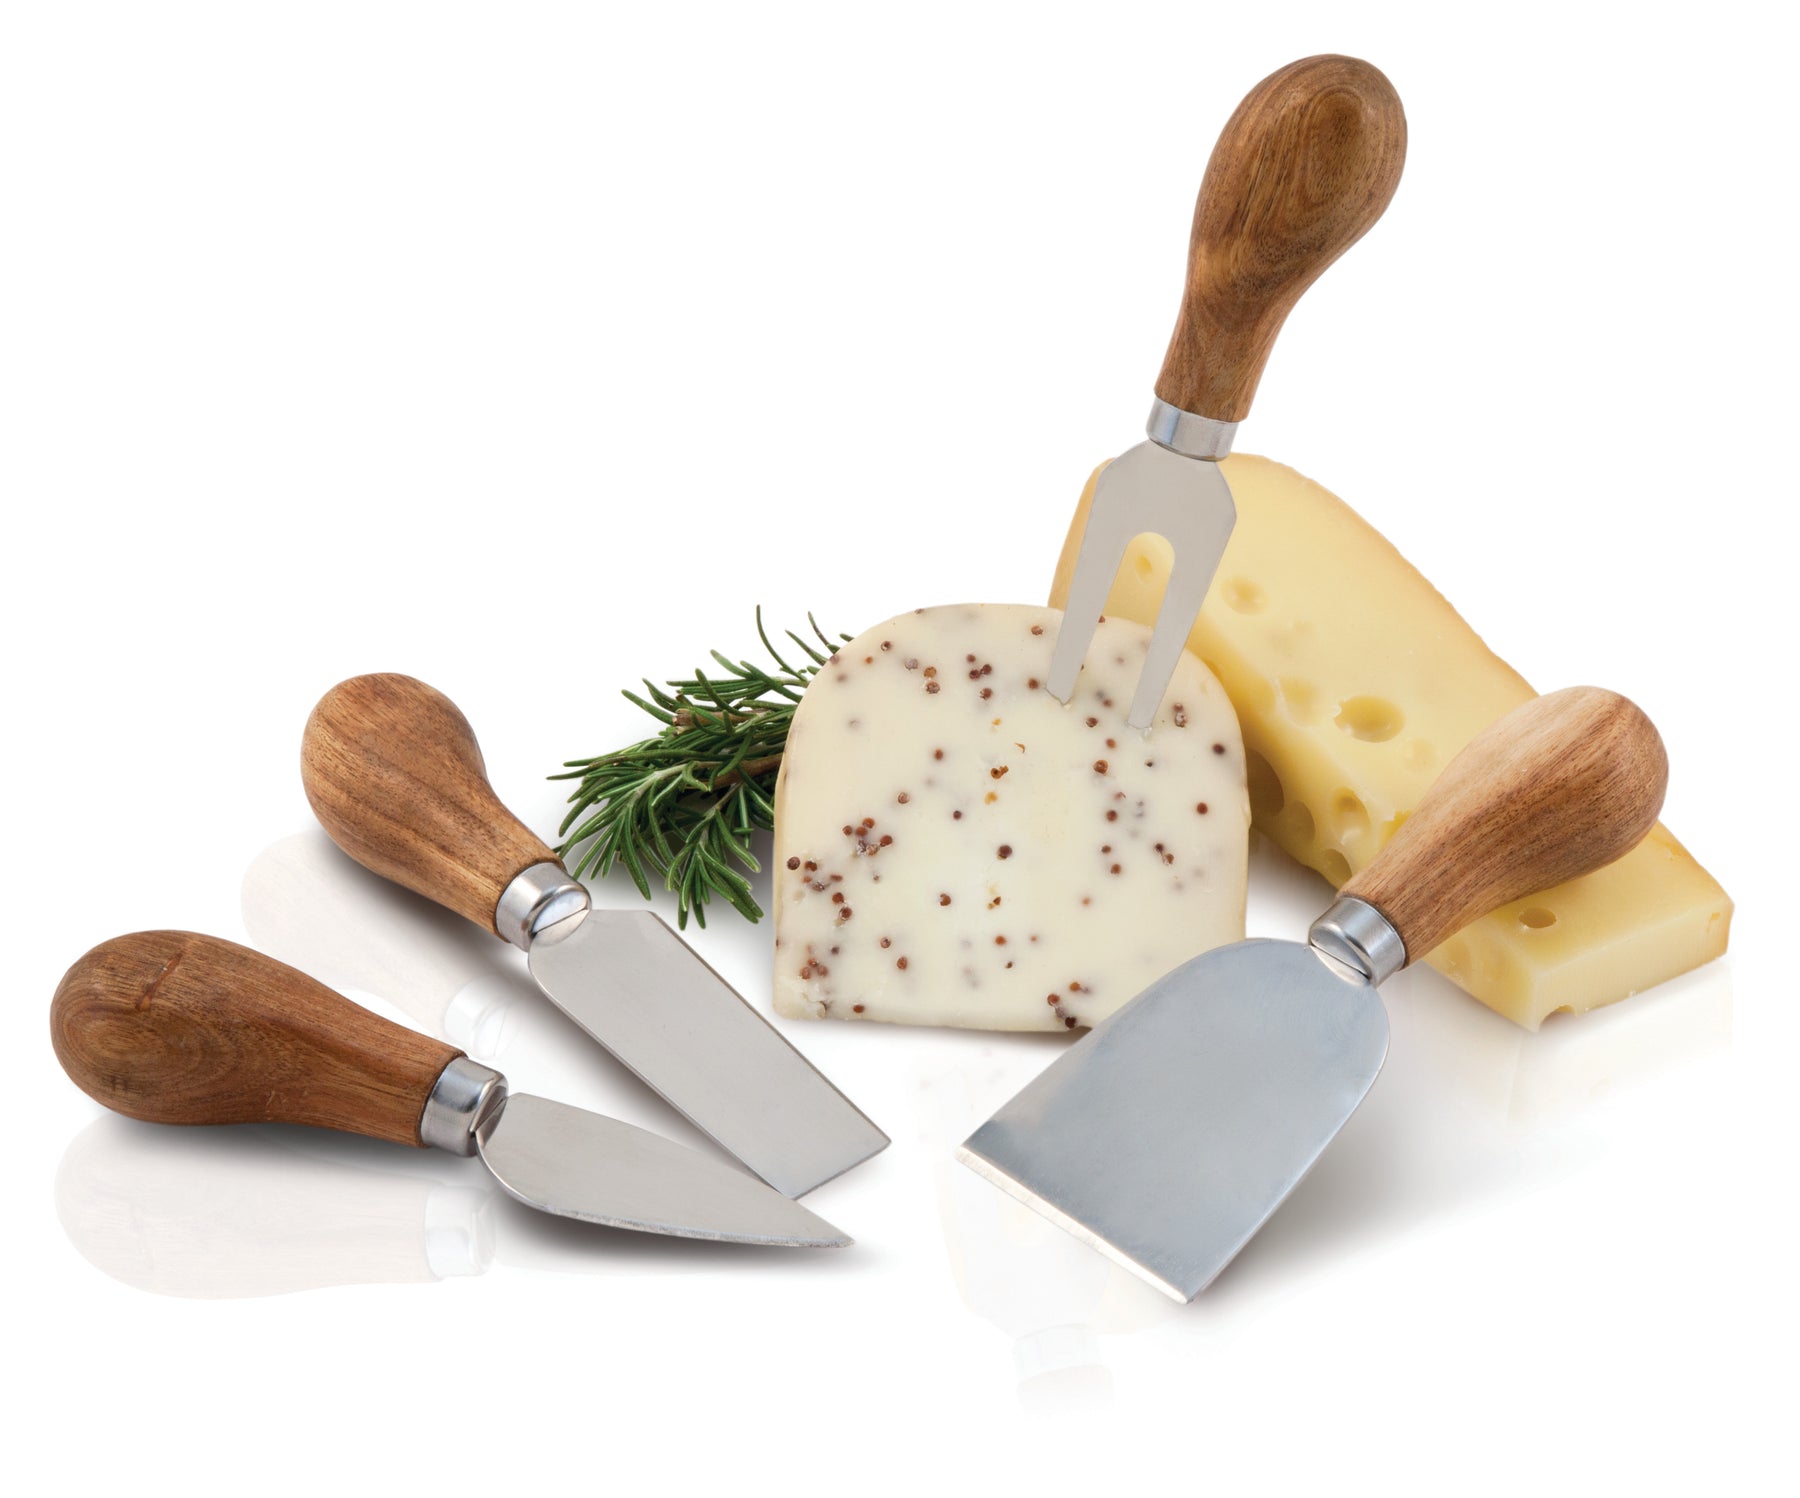 La Cote 4 PC Cheese Knife Set in Pine Wood Mini Barrel – La Cote Homeware